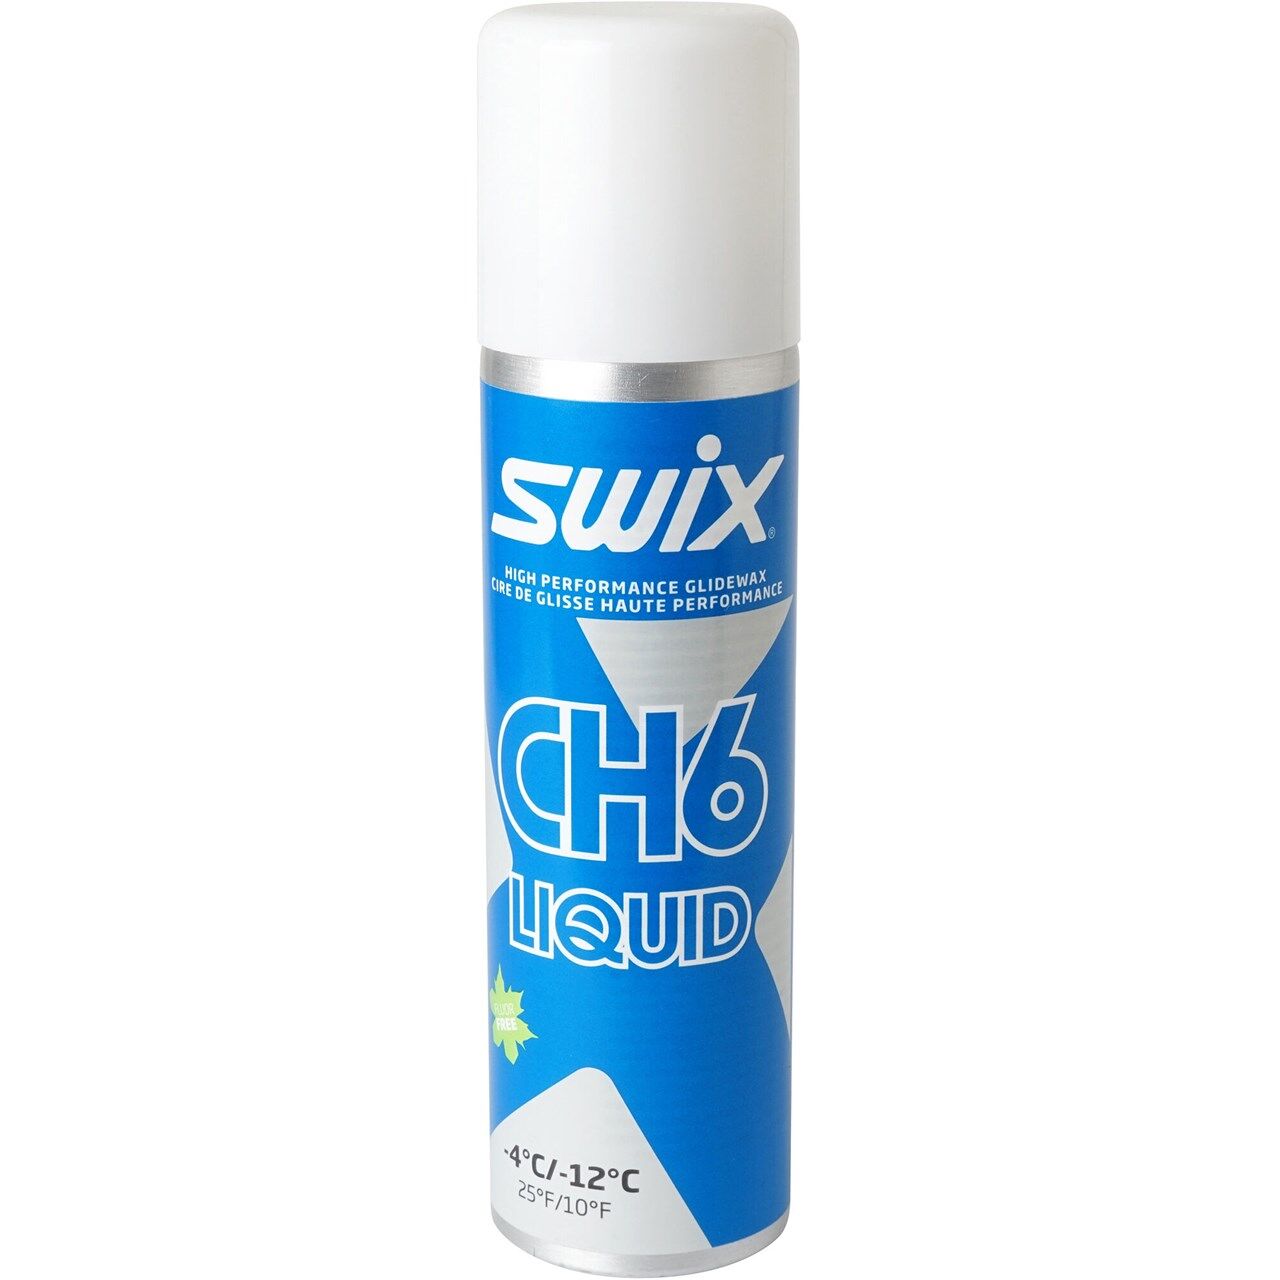 Swix CH06X Liquid -4C/-12C (125ml) - Heisswachs